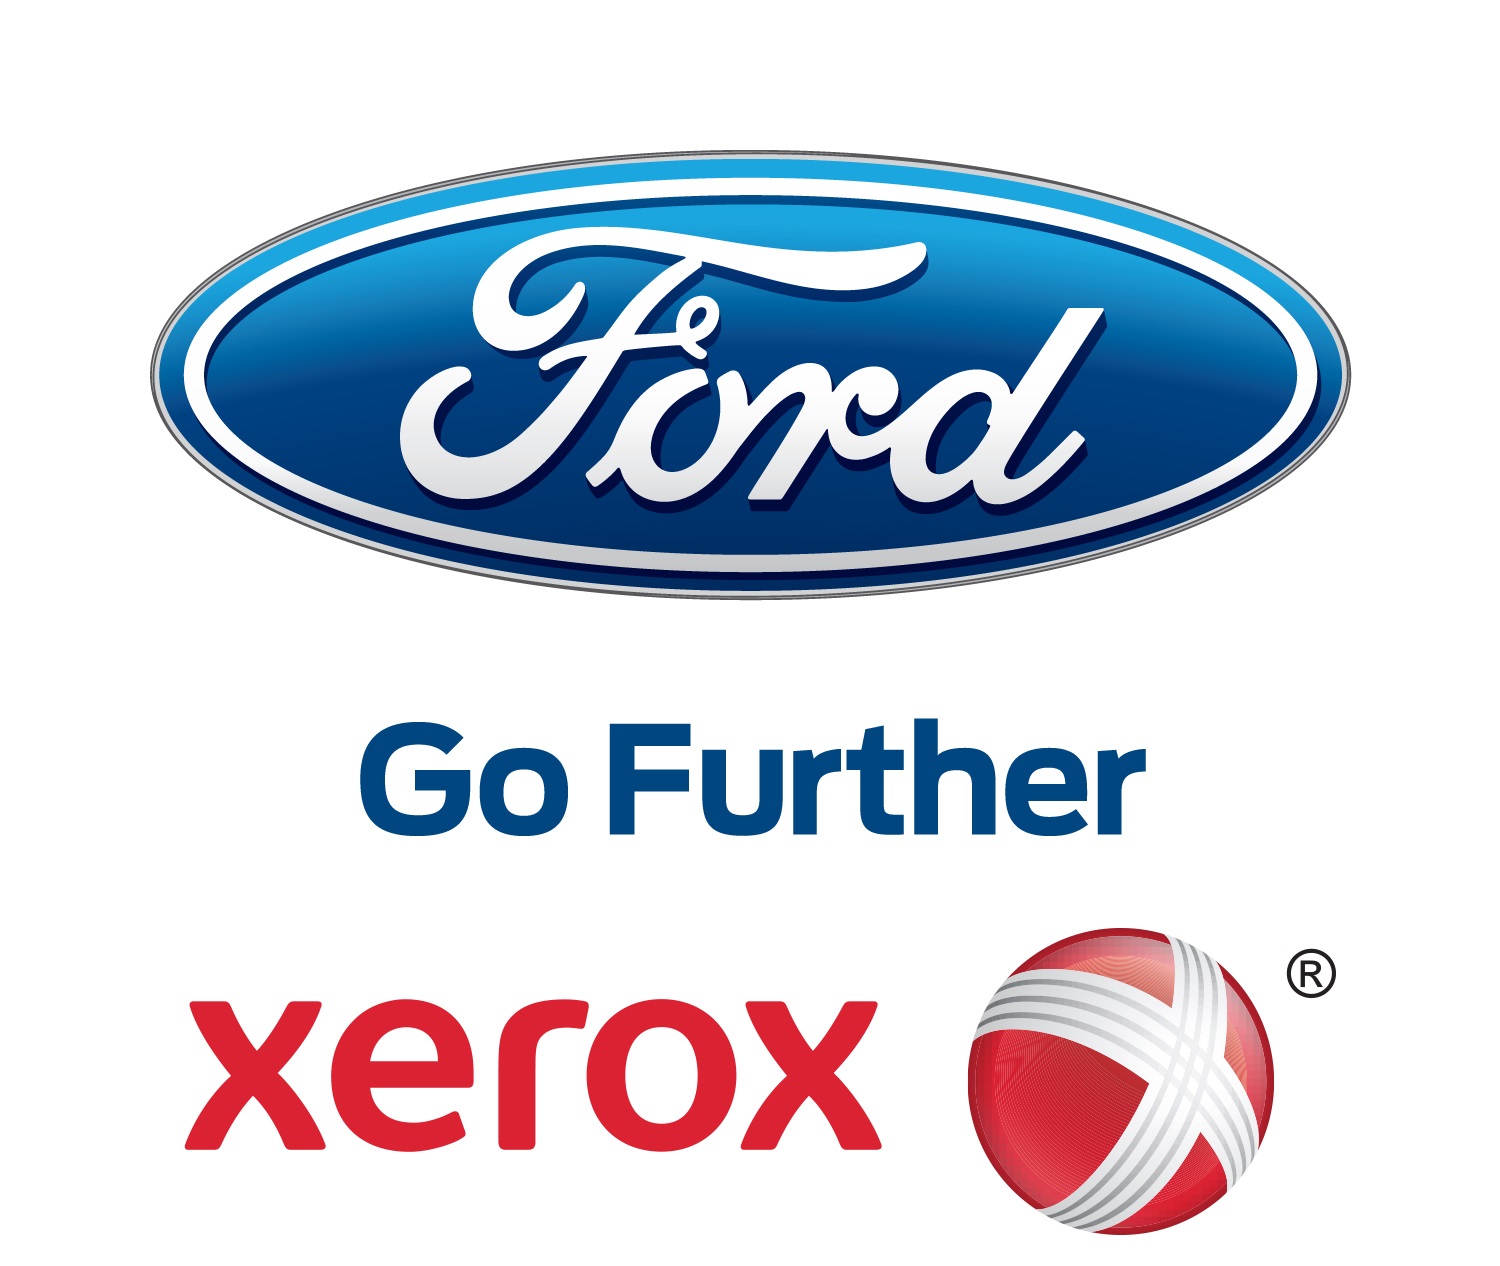 2016 Annual Enrollment Ford eGuide Redesign - Logo - https://s41078.pcdn.co/wp-content/uploads/2018/02/Xerox-Combo_logo.jpg